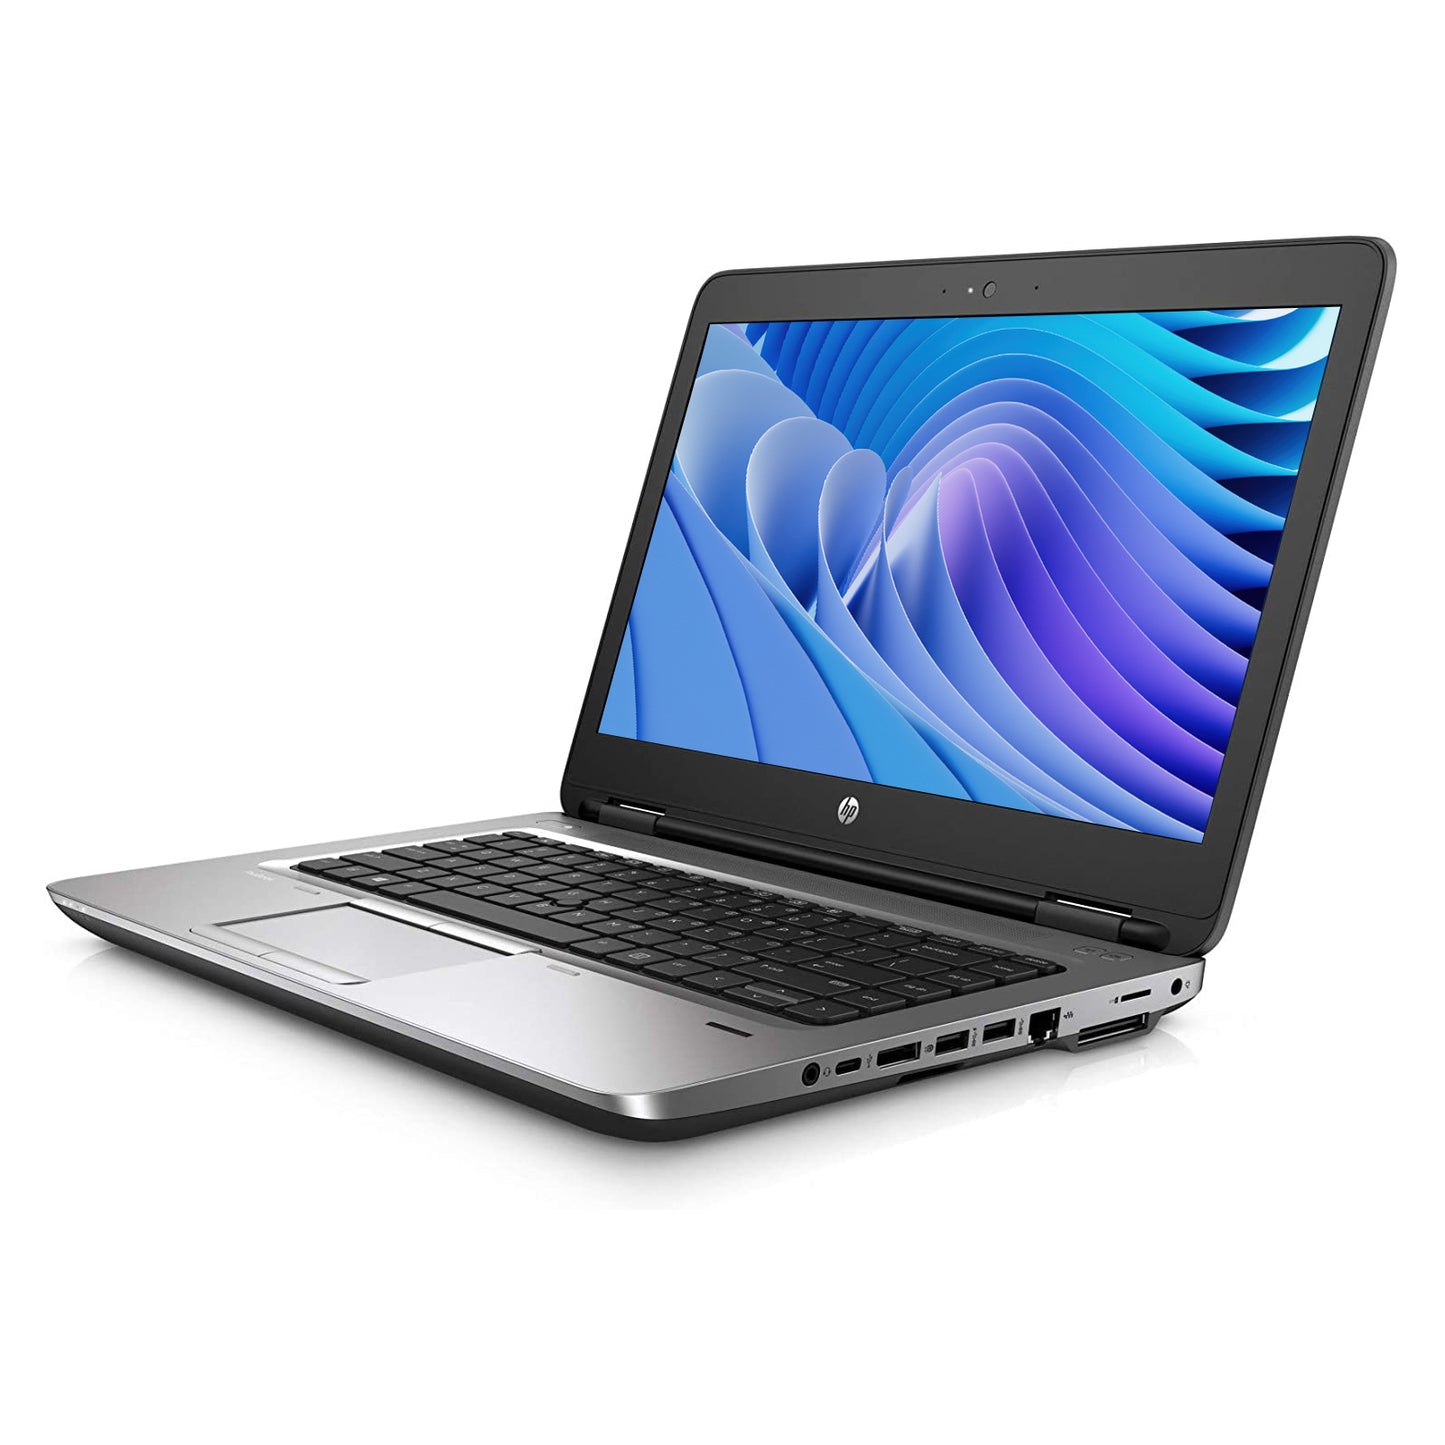 Hp ProBook 640 Core i7 Laptop Offers (Open Box)